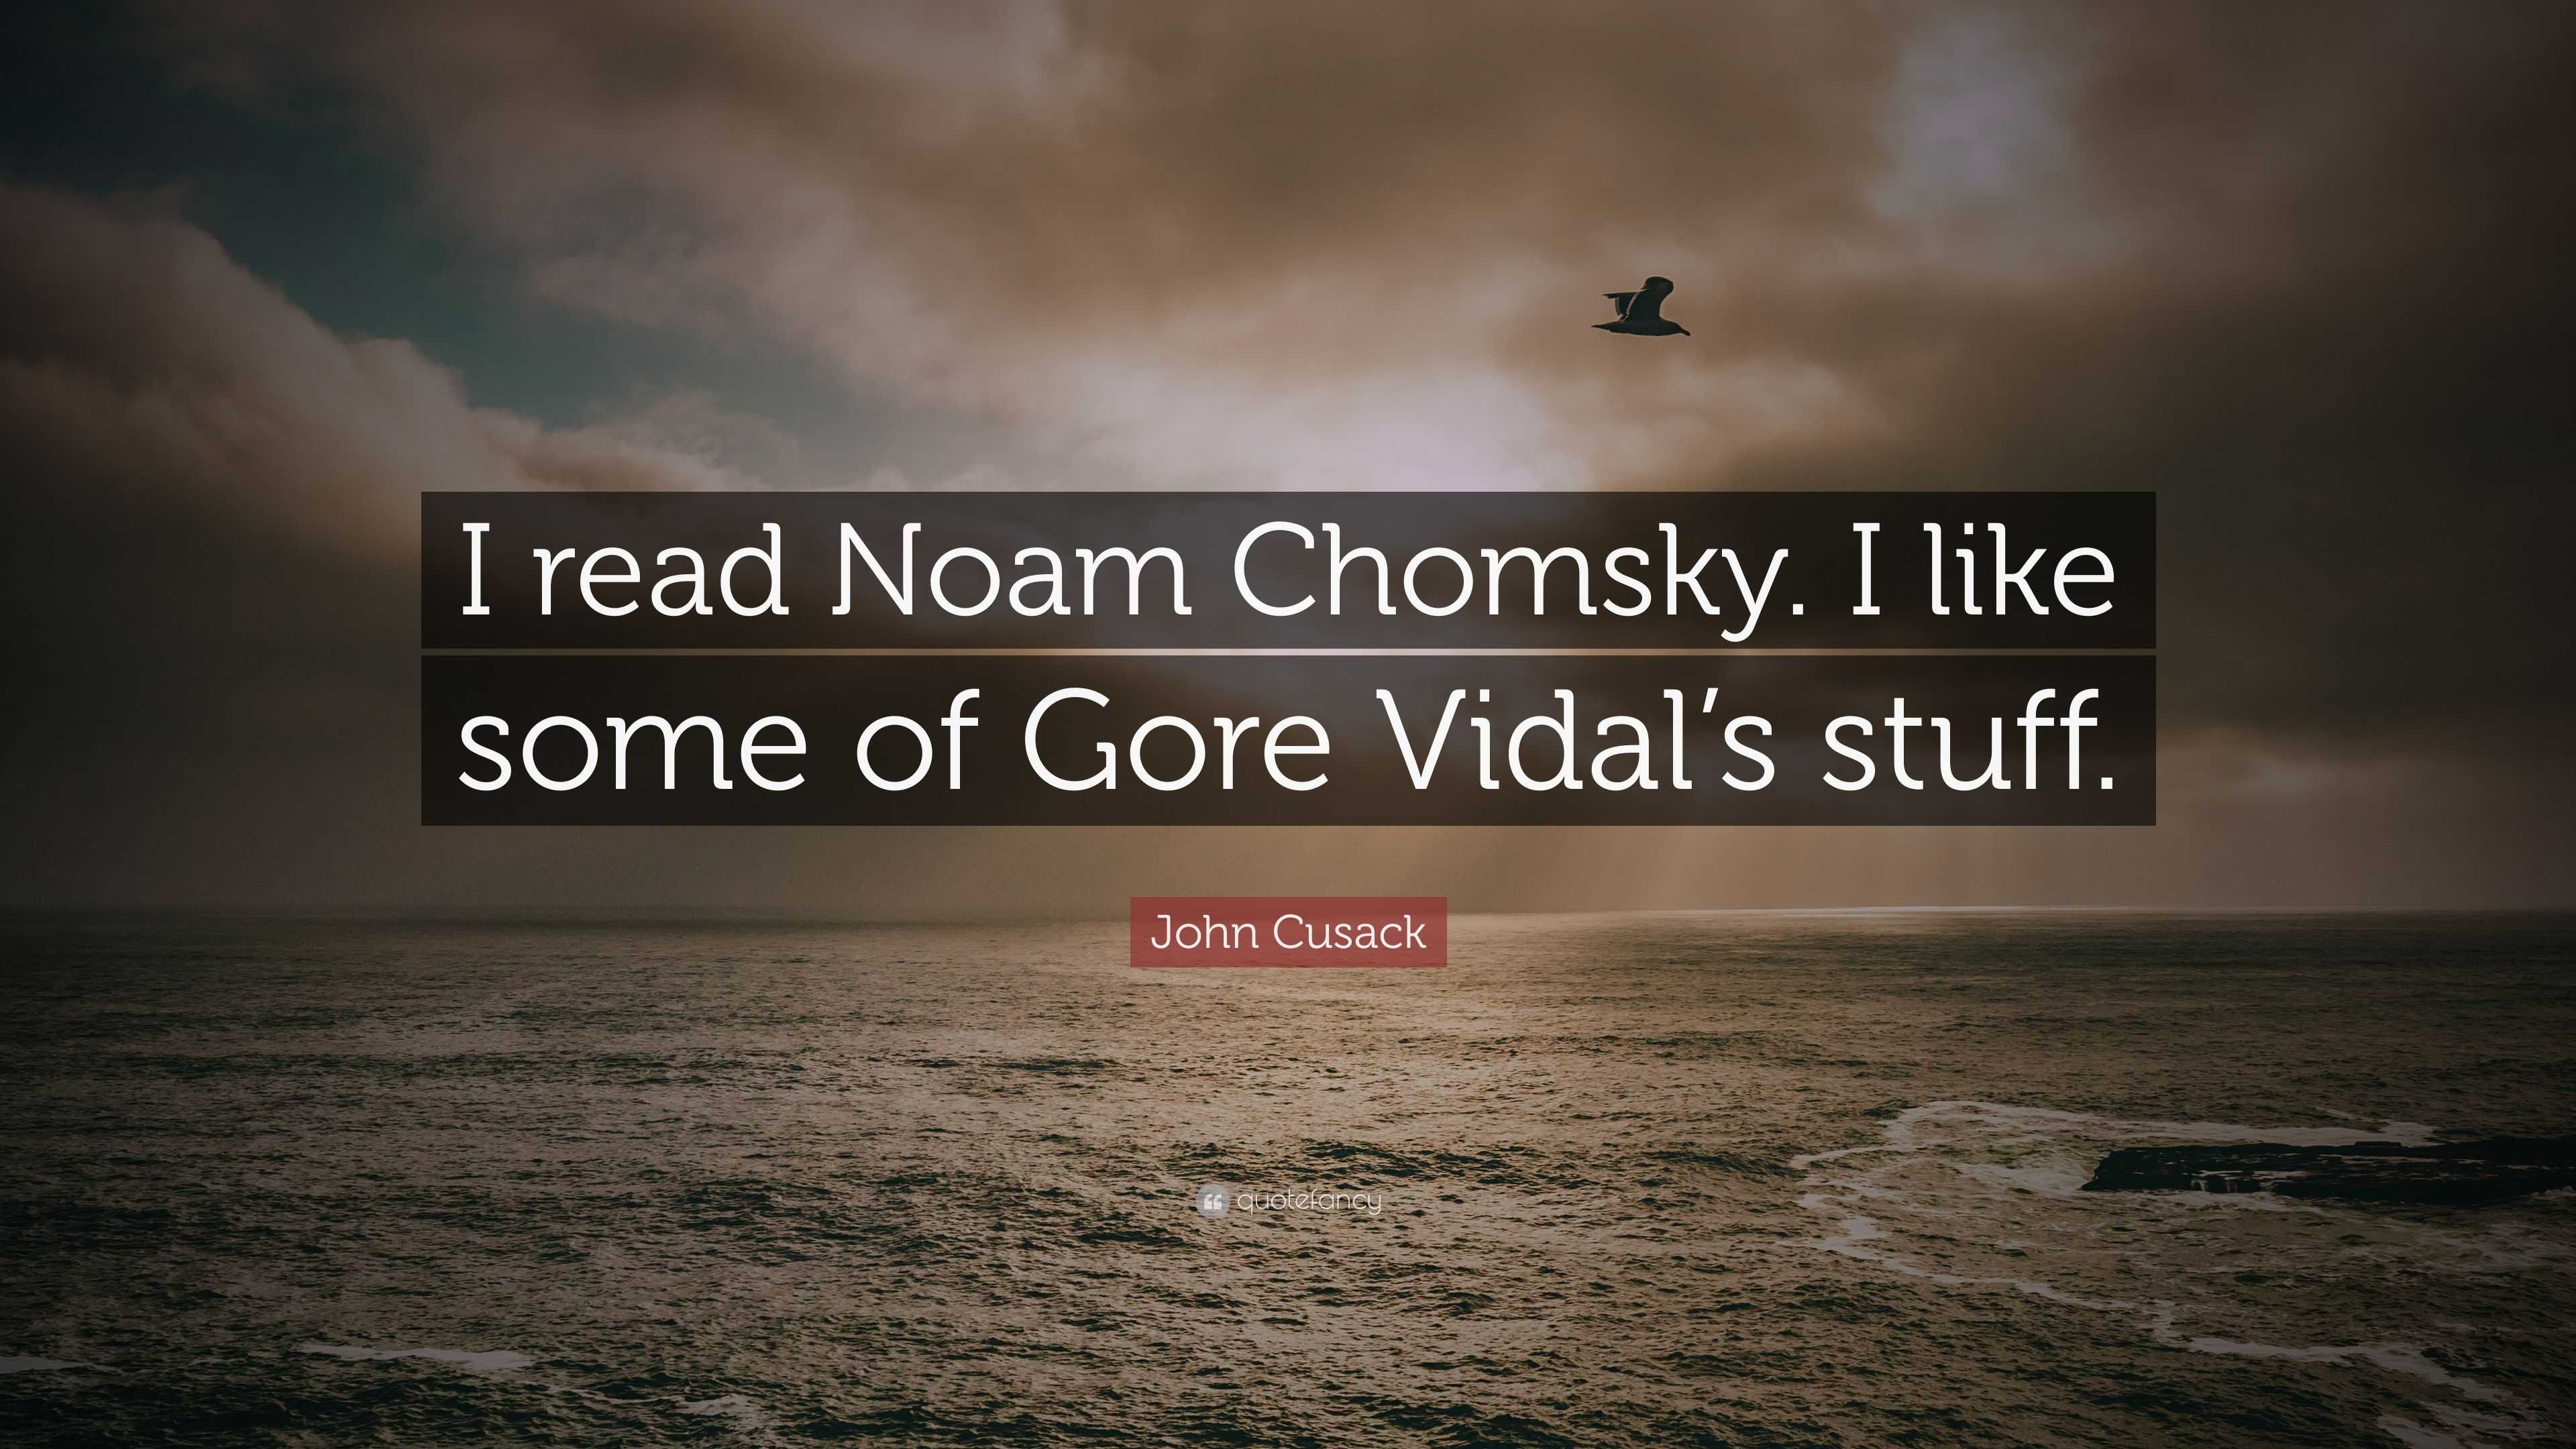 John Cusack Quote: “I read Noam Chomsky. I like some of Gore Vidal's stuff.”